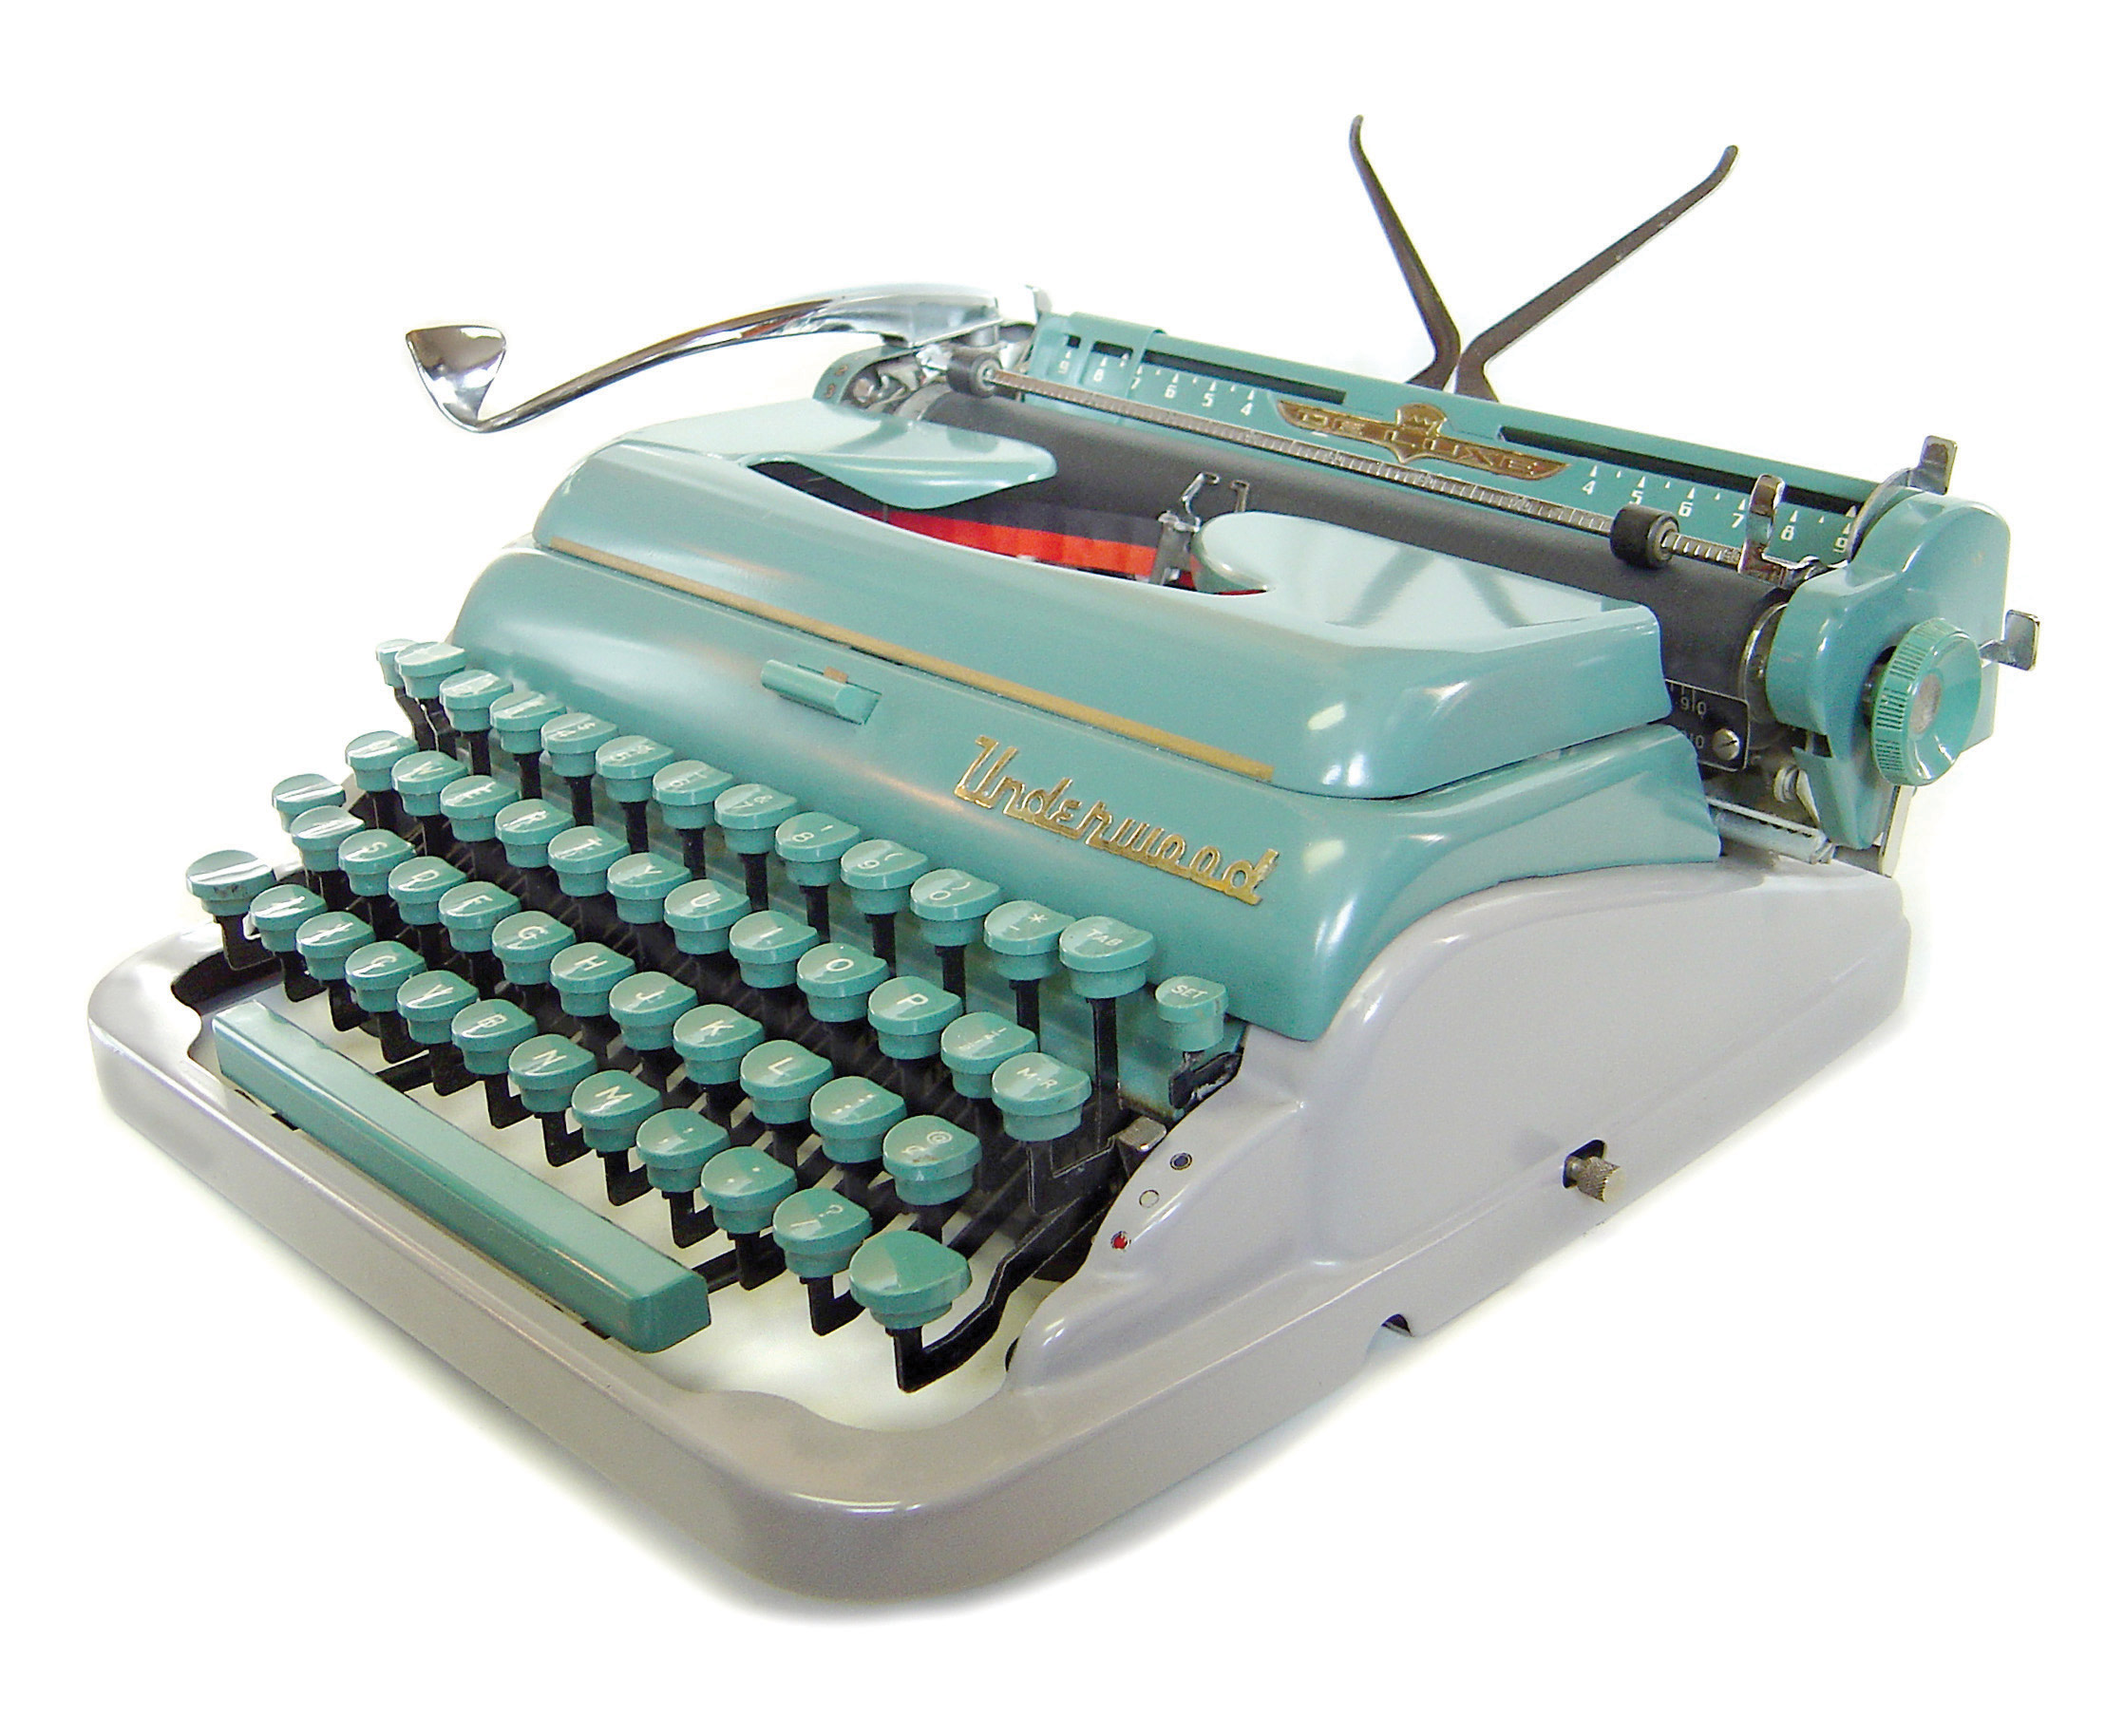 Underwood Deluxe Quiet Tab typewriter